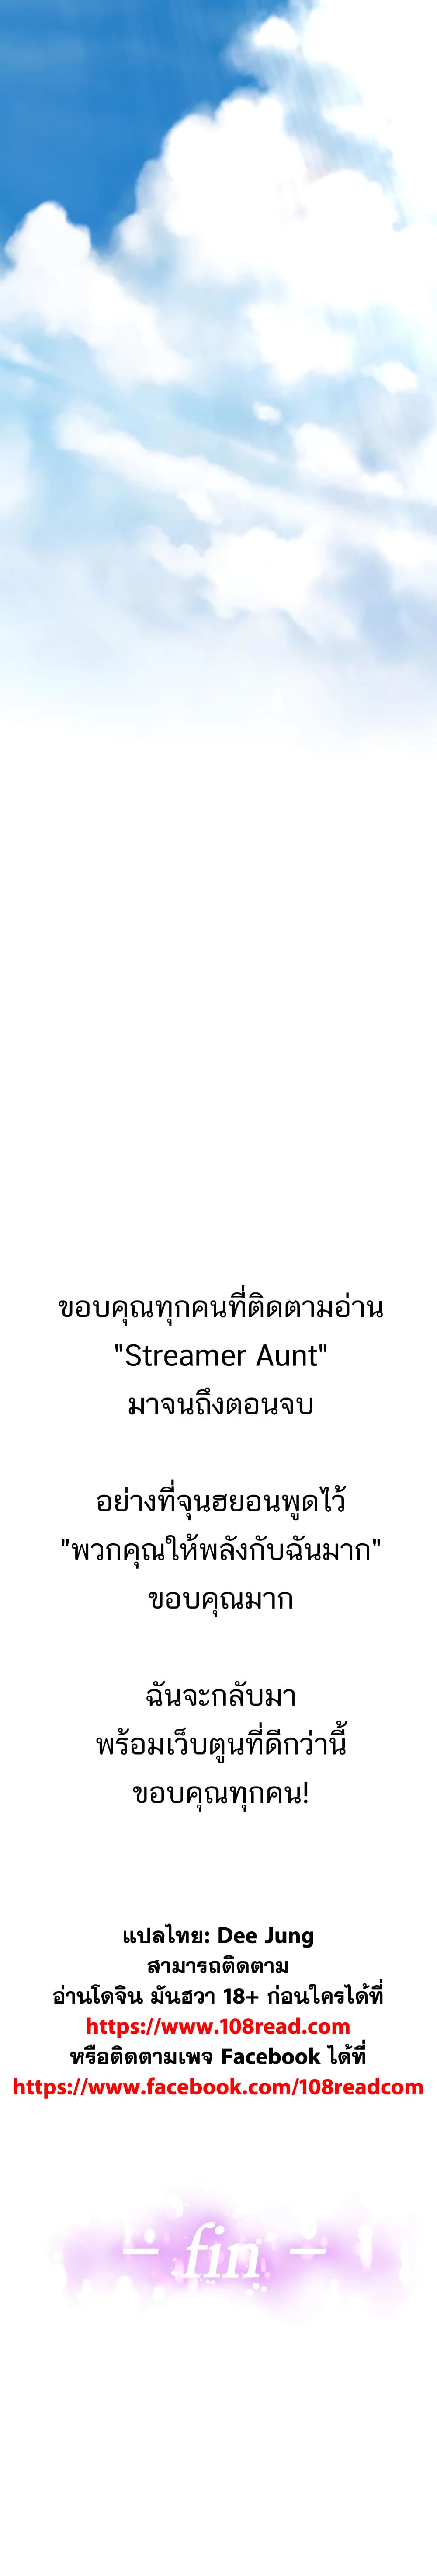 Streamer Aunt 30 (30)